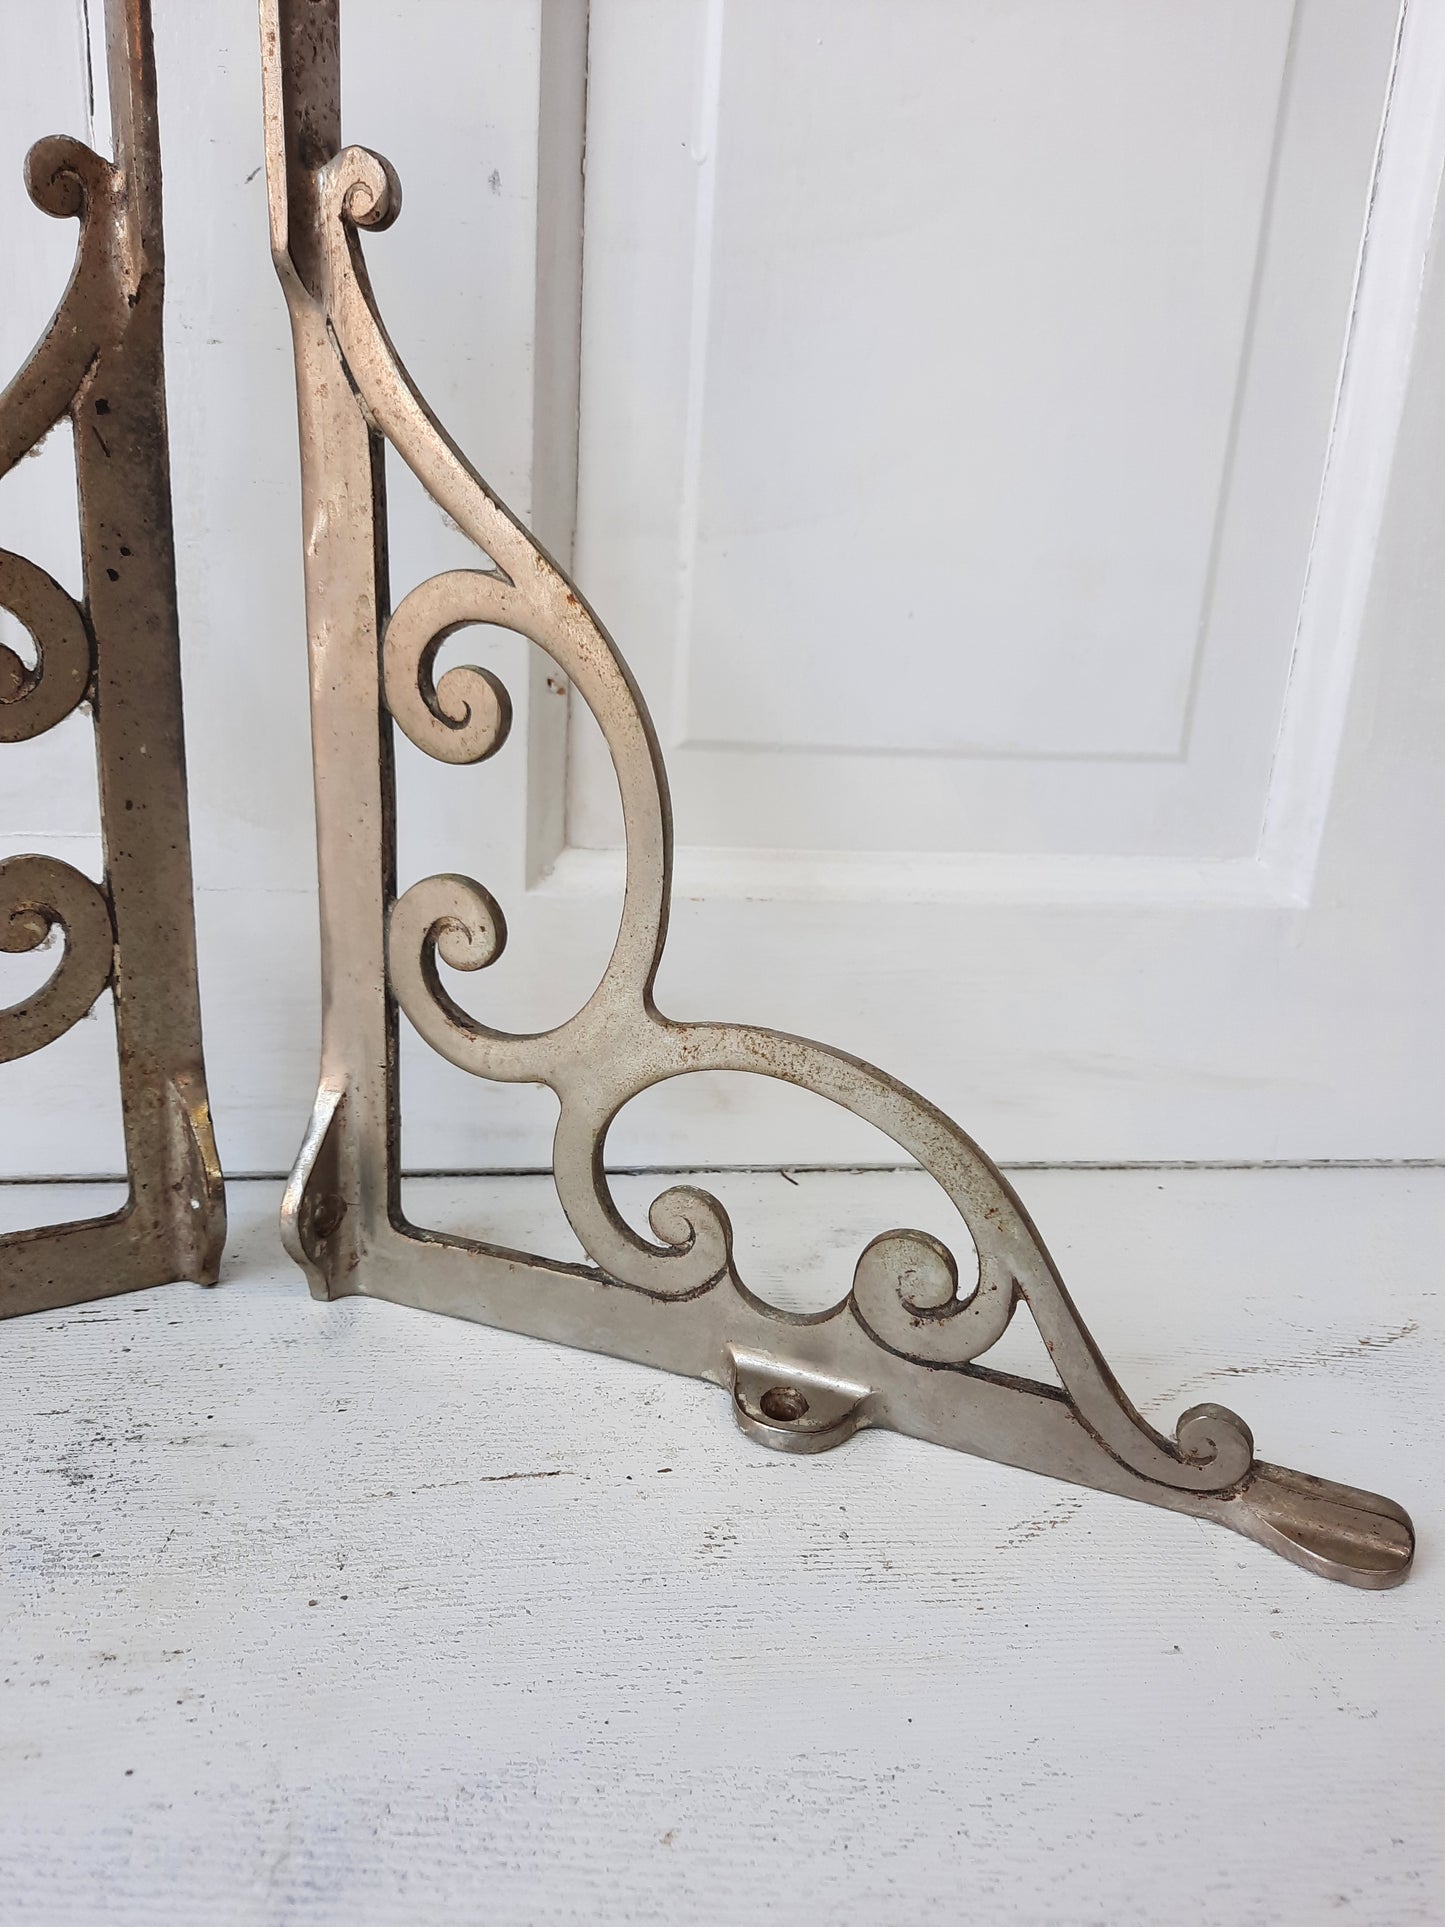 Pair of Nickel Plated Silver Shelf Brackets, Ornate Design Scroll Cast Iron Shelf Supports